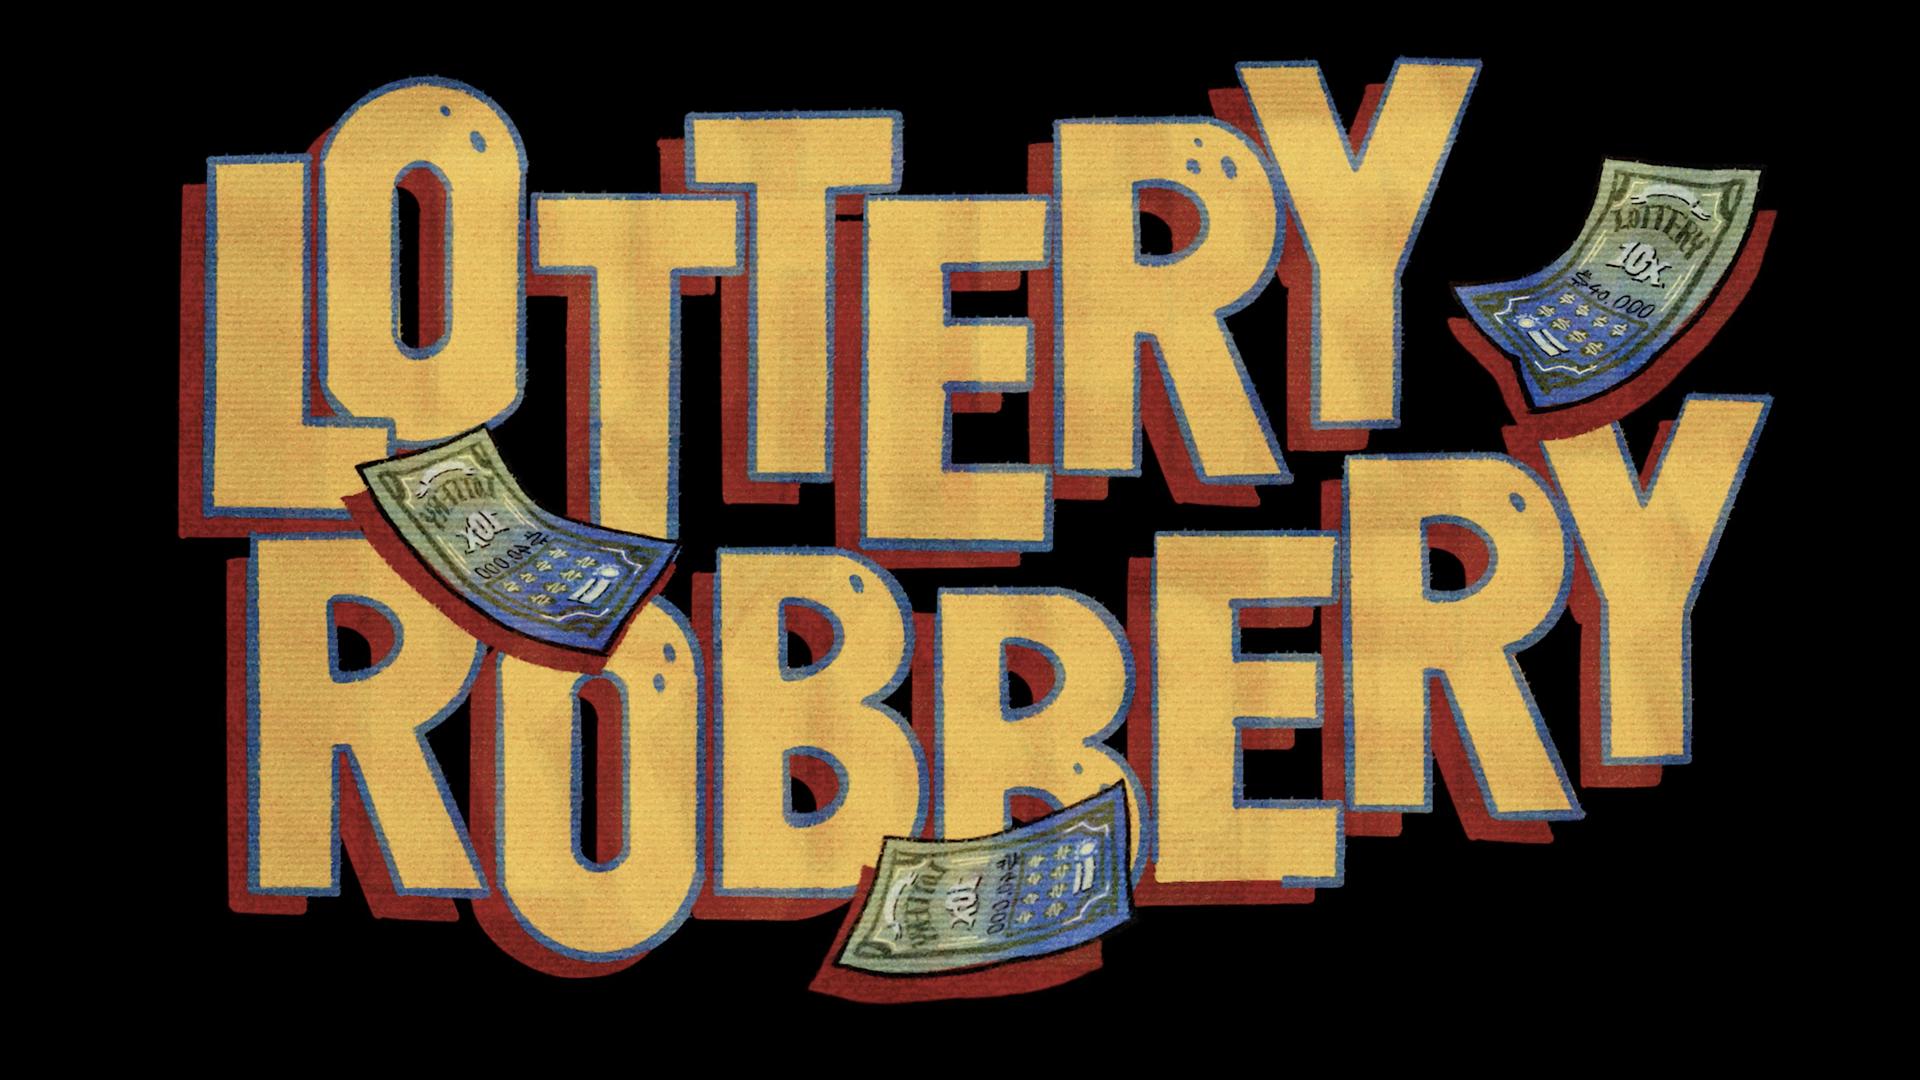 Lottery Robbery